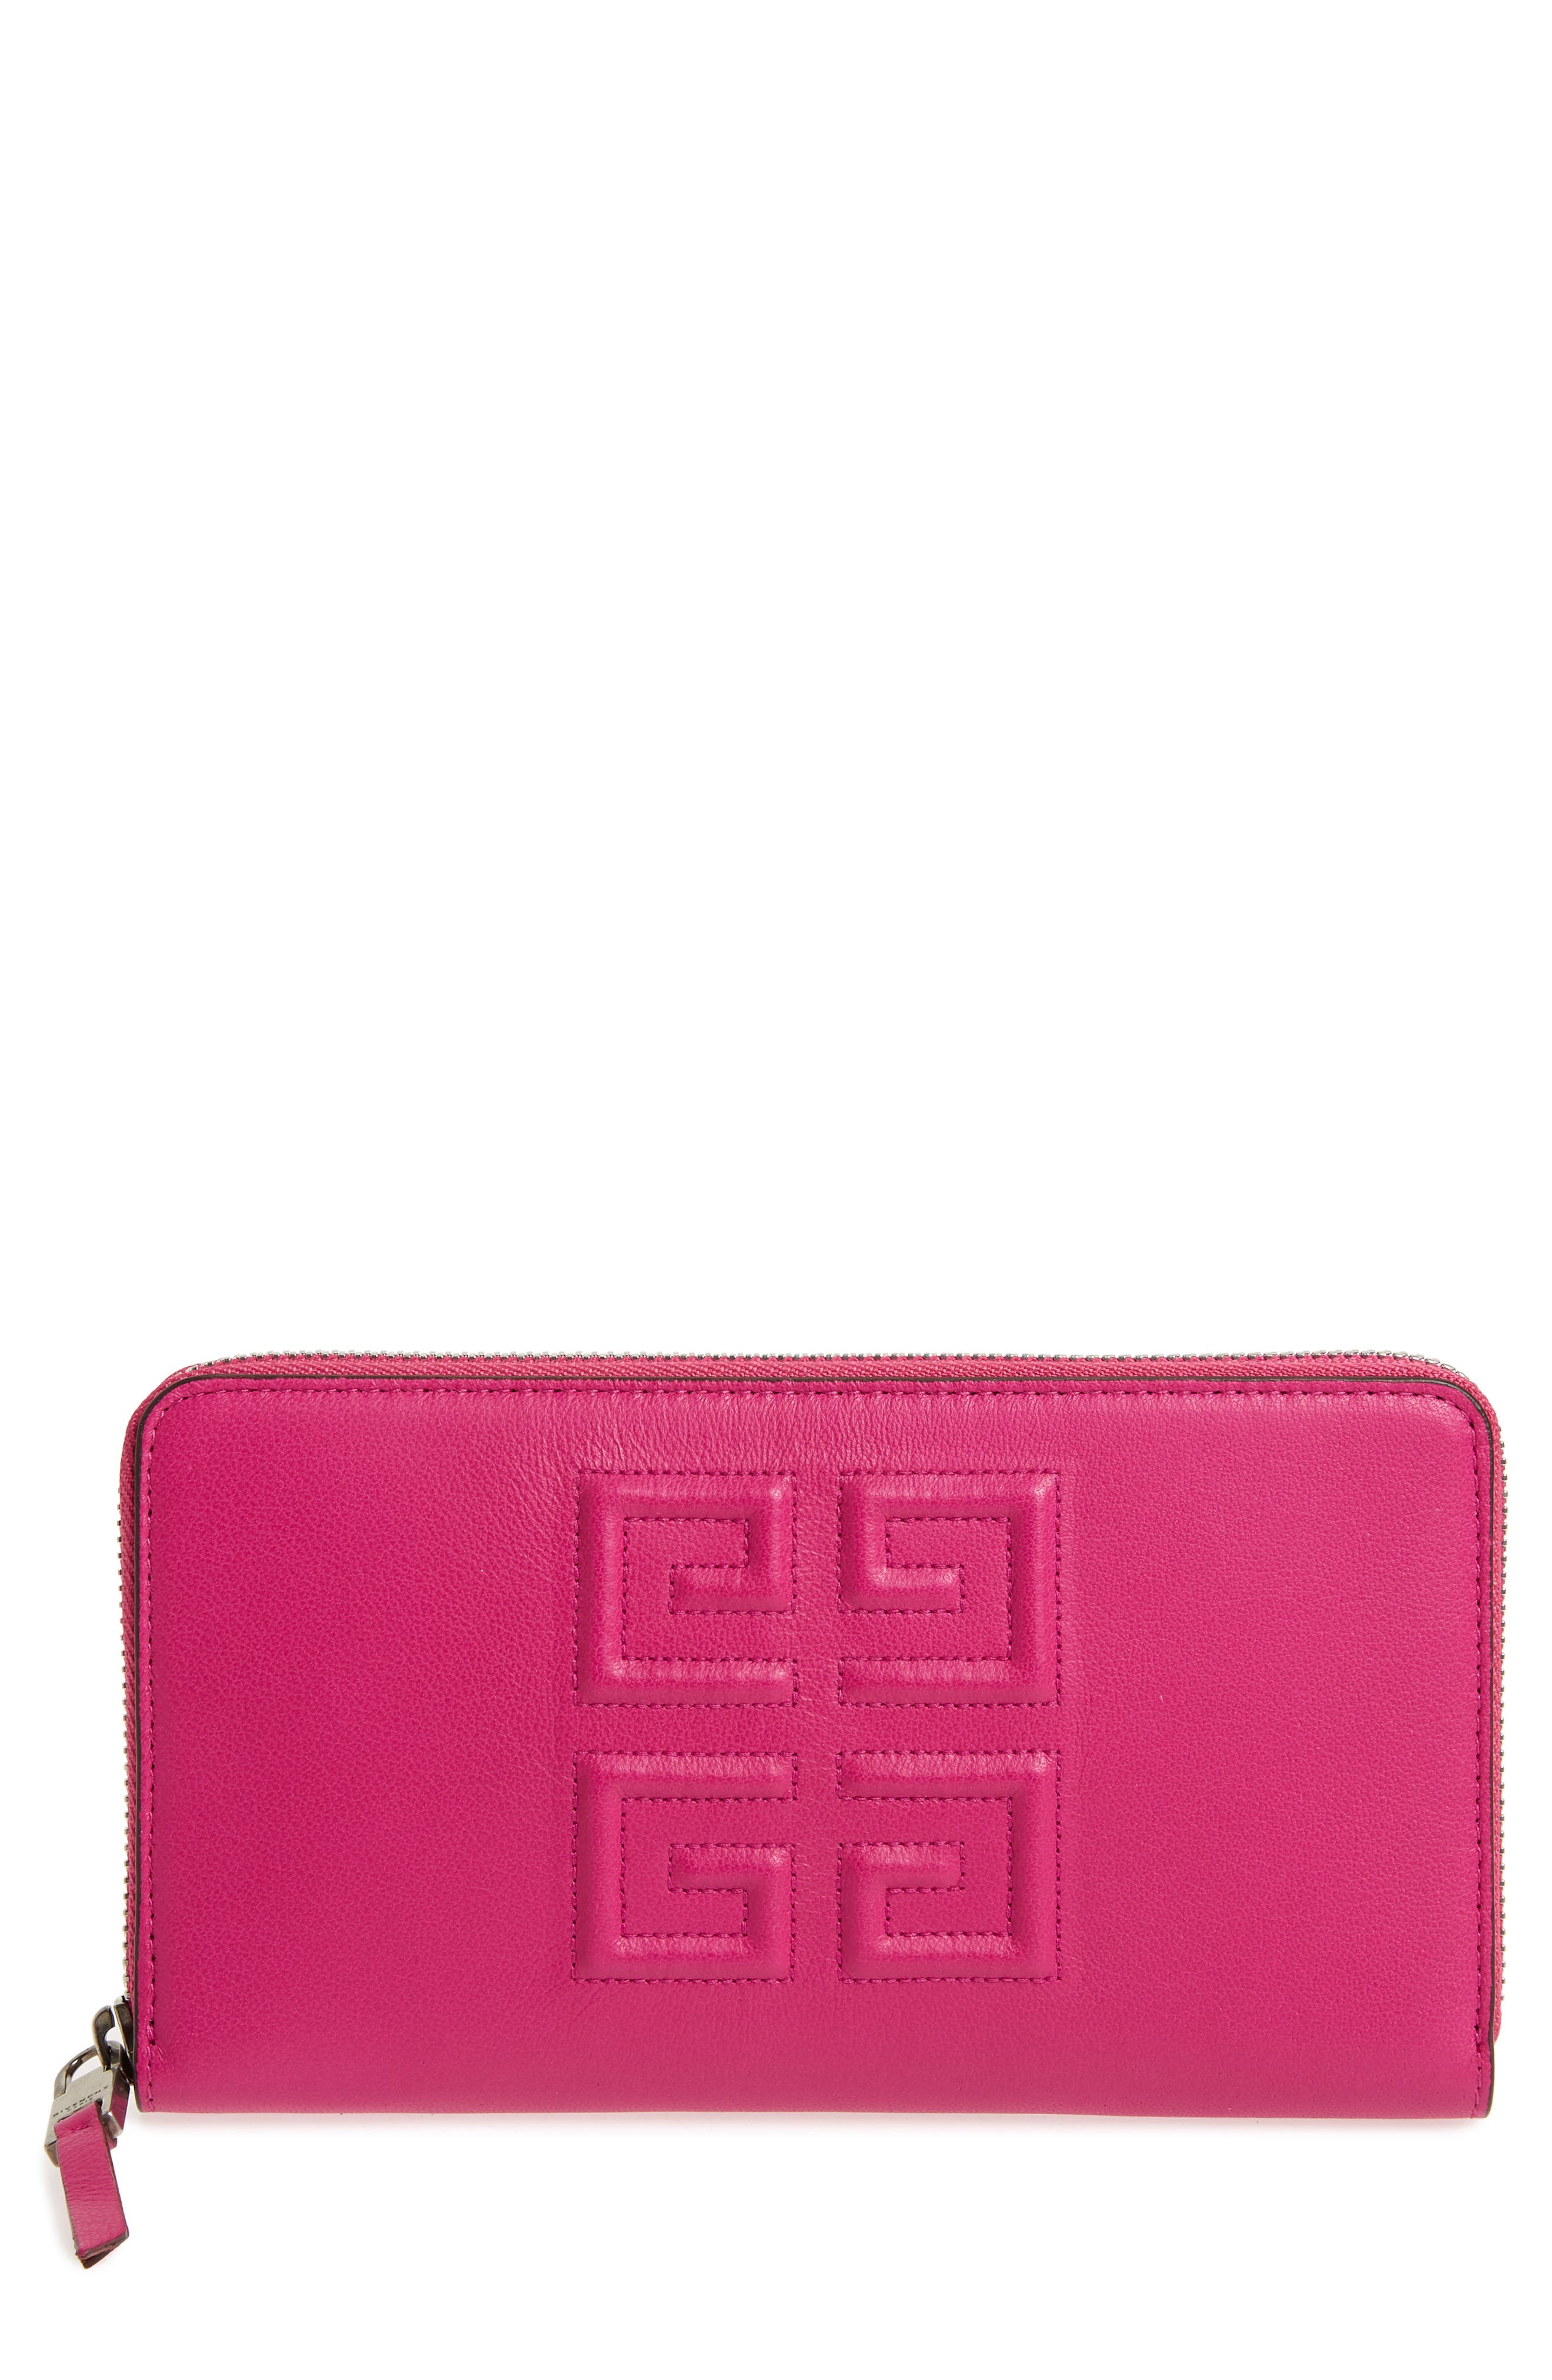 givenchy pink wallet